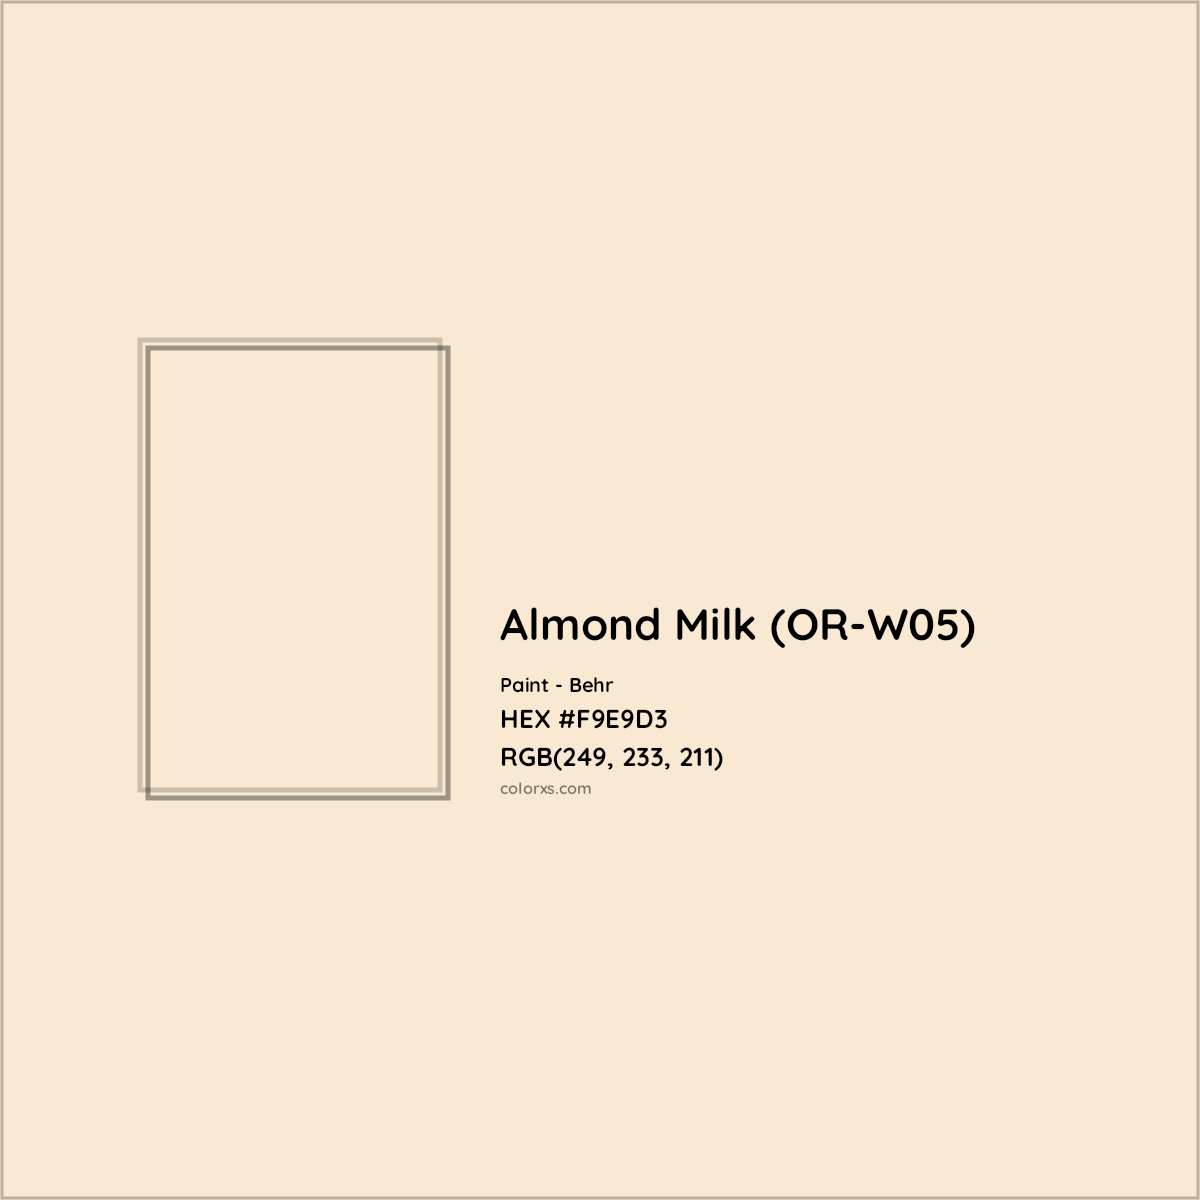 HEX #F9E9D3 Almond Milk (OR-W05) Paint Behr - Color Code